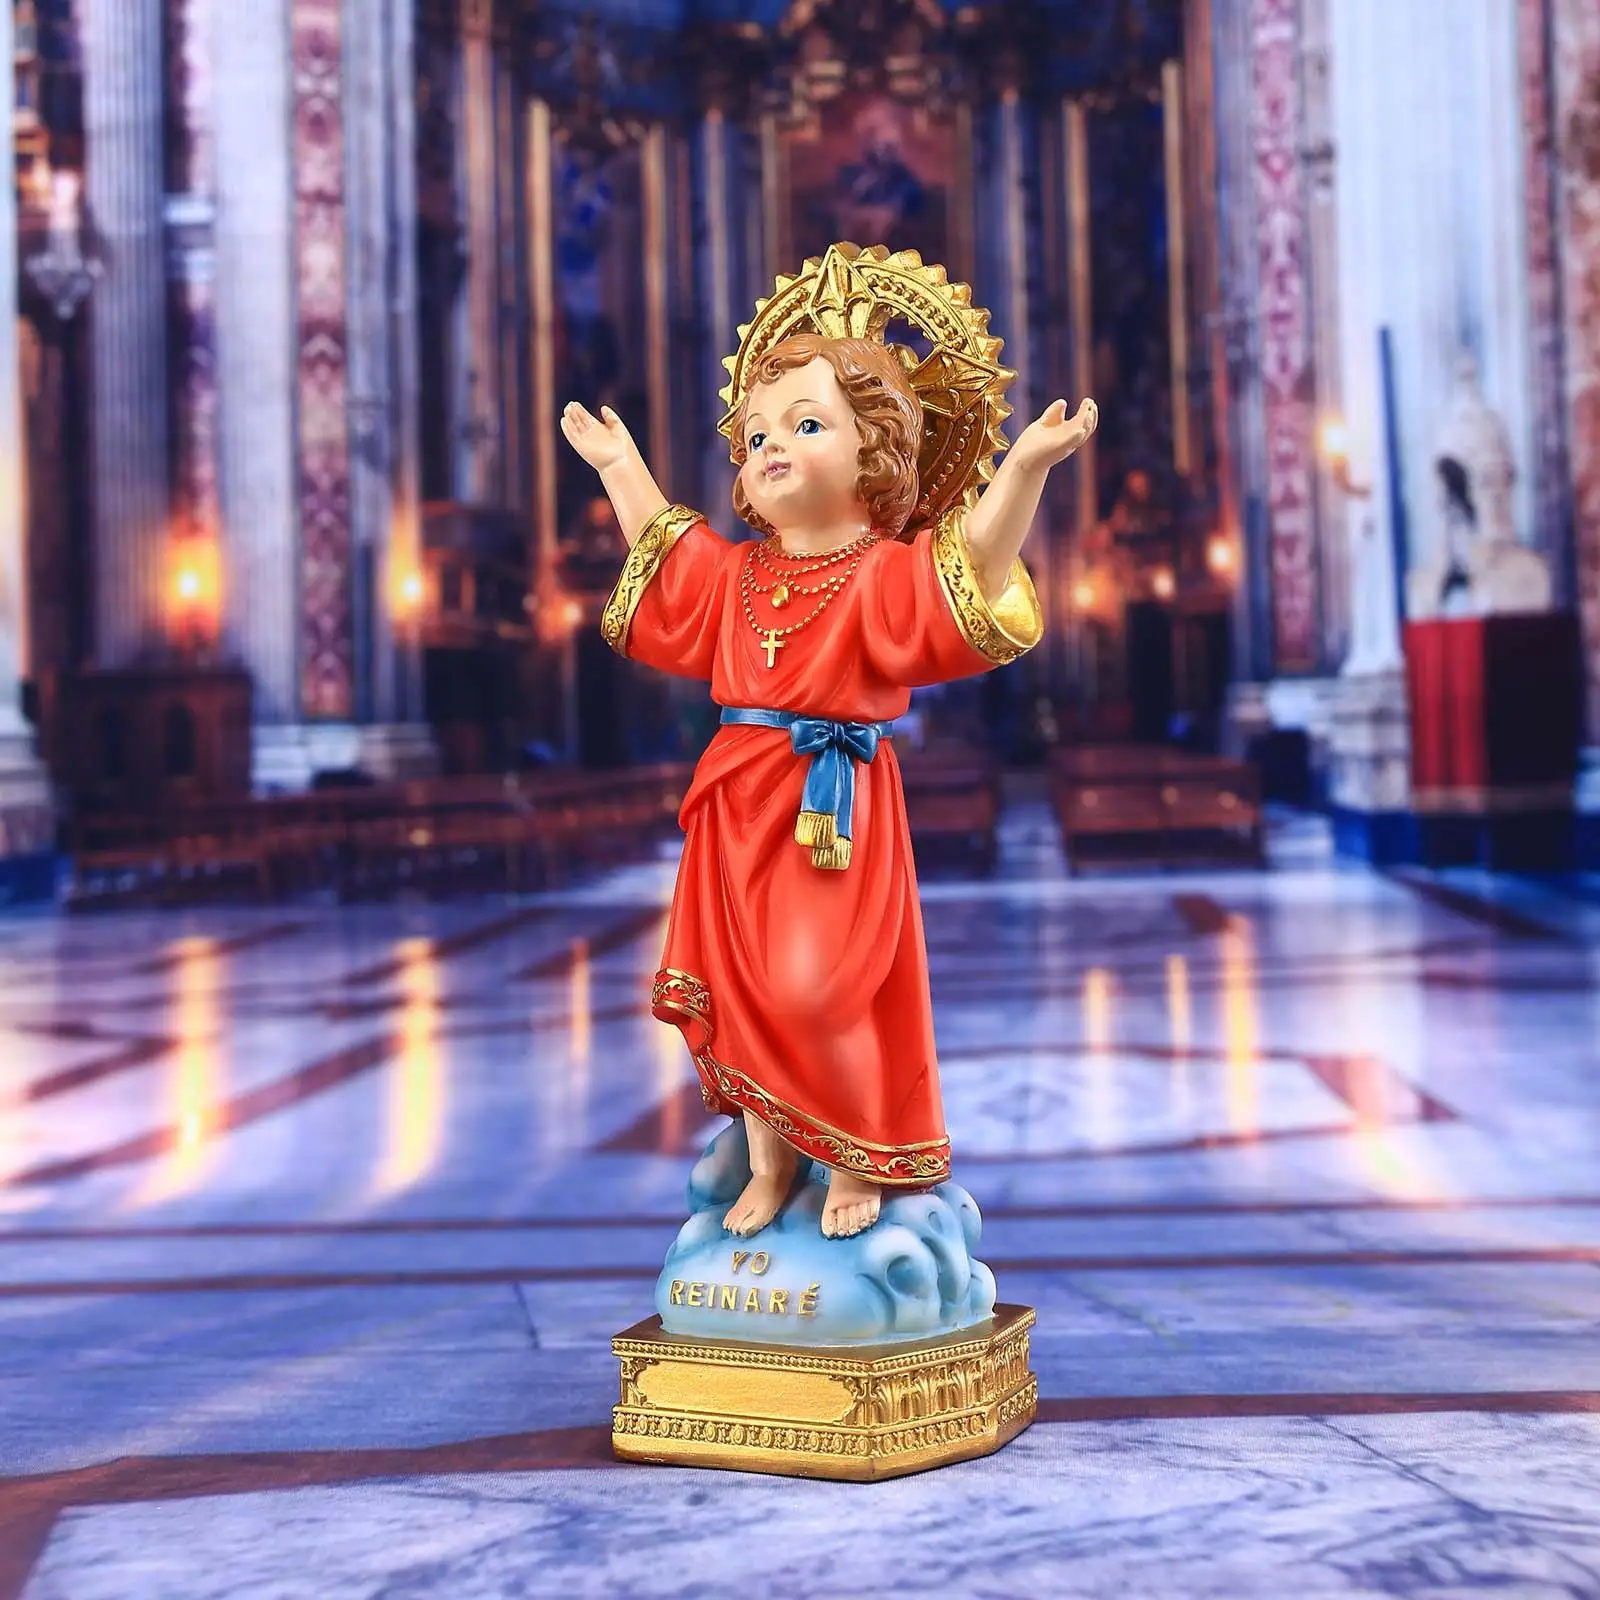 Resin Statue, Sculpture Religious Decor Church Ornament for Desktop Church Home Housewarming Gifts